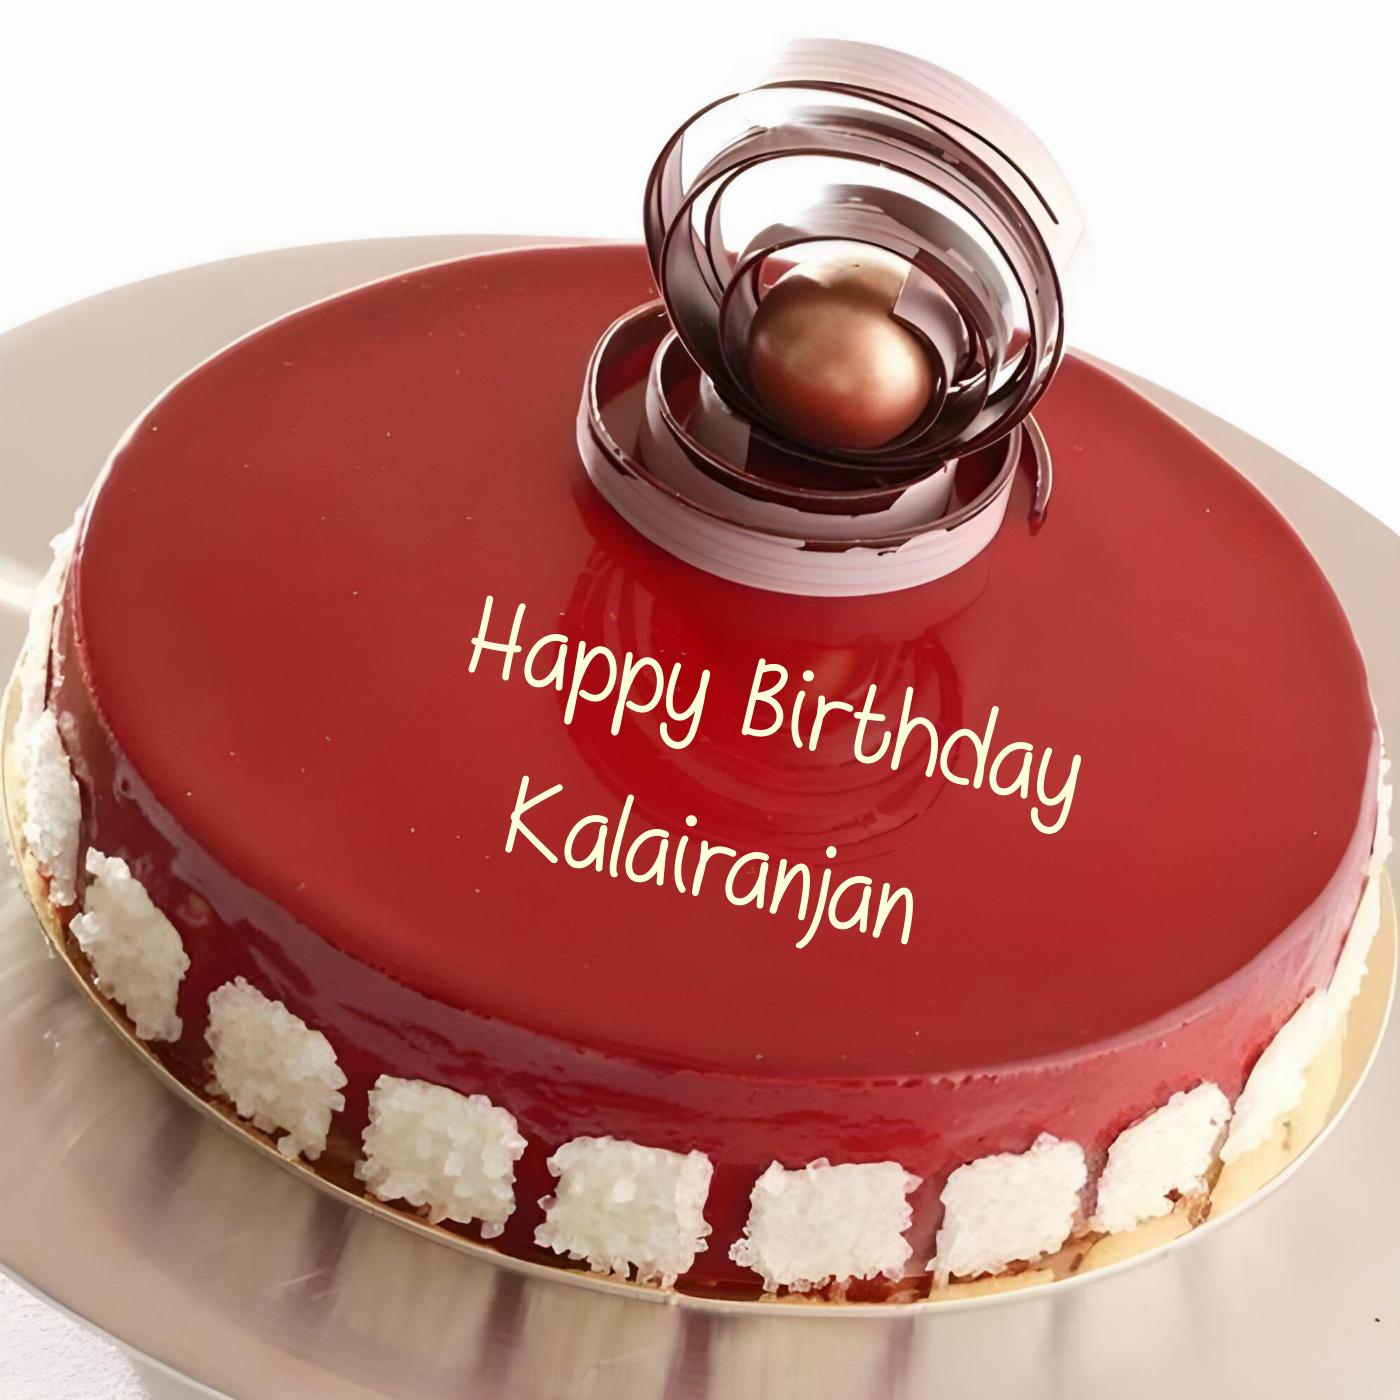 Happy Birthday Kalairanjan Beautiful Red Cake